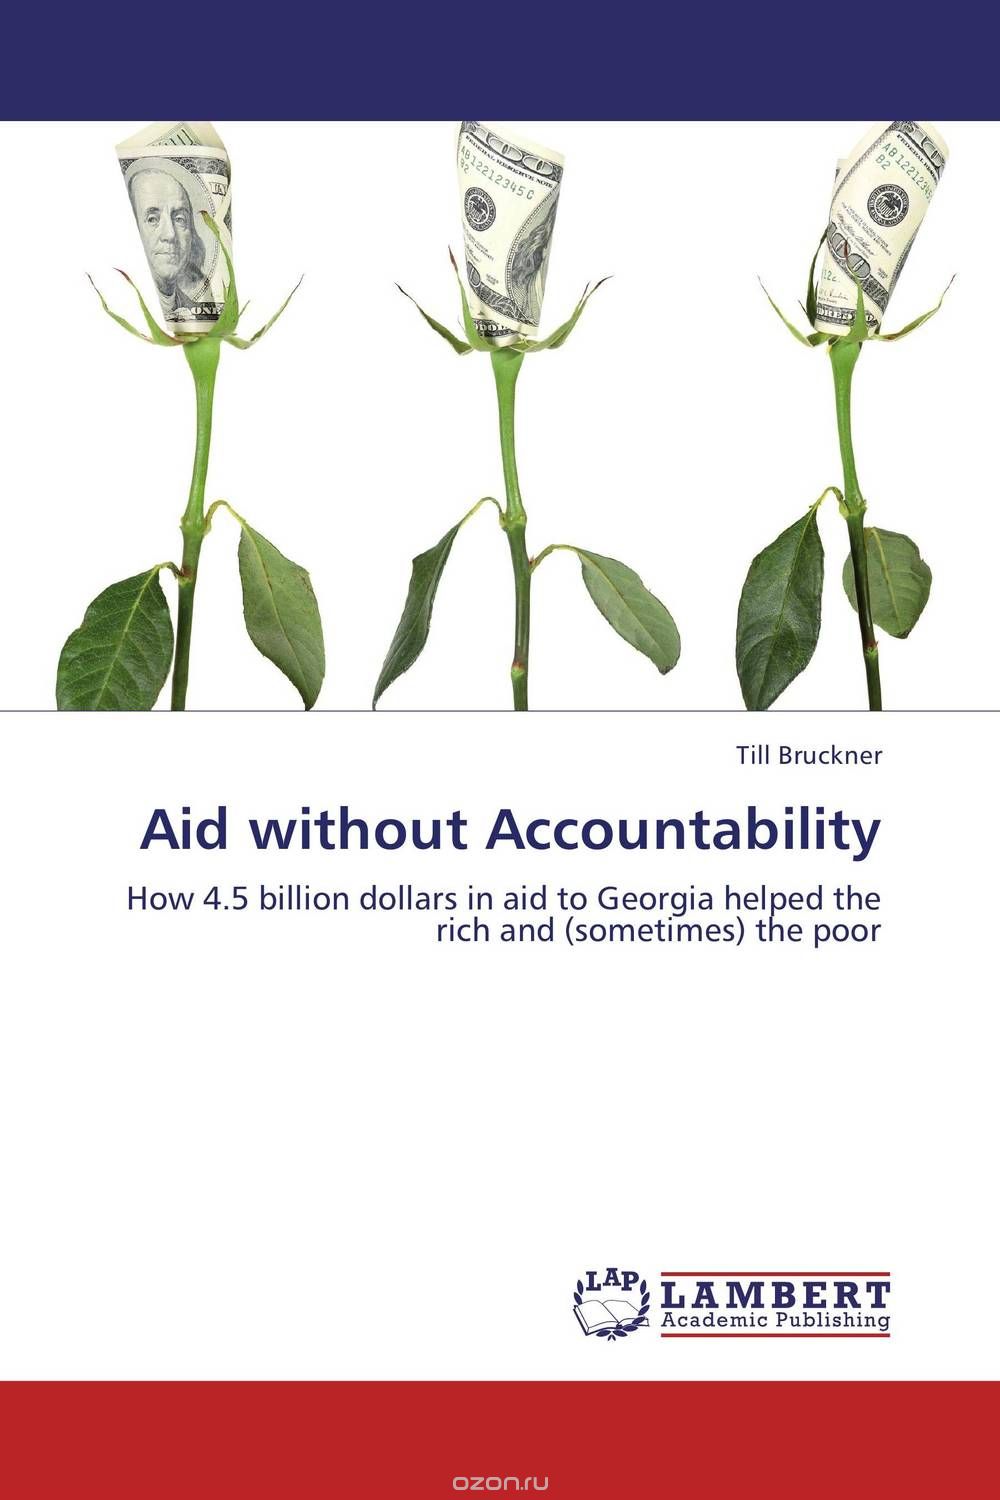 Скачать книгу "Aid without Accountability"